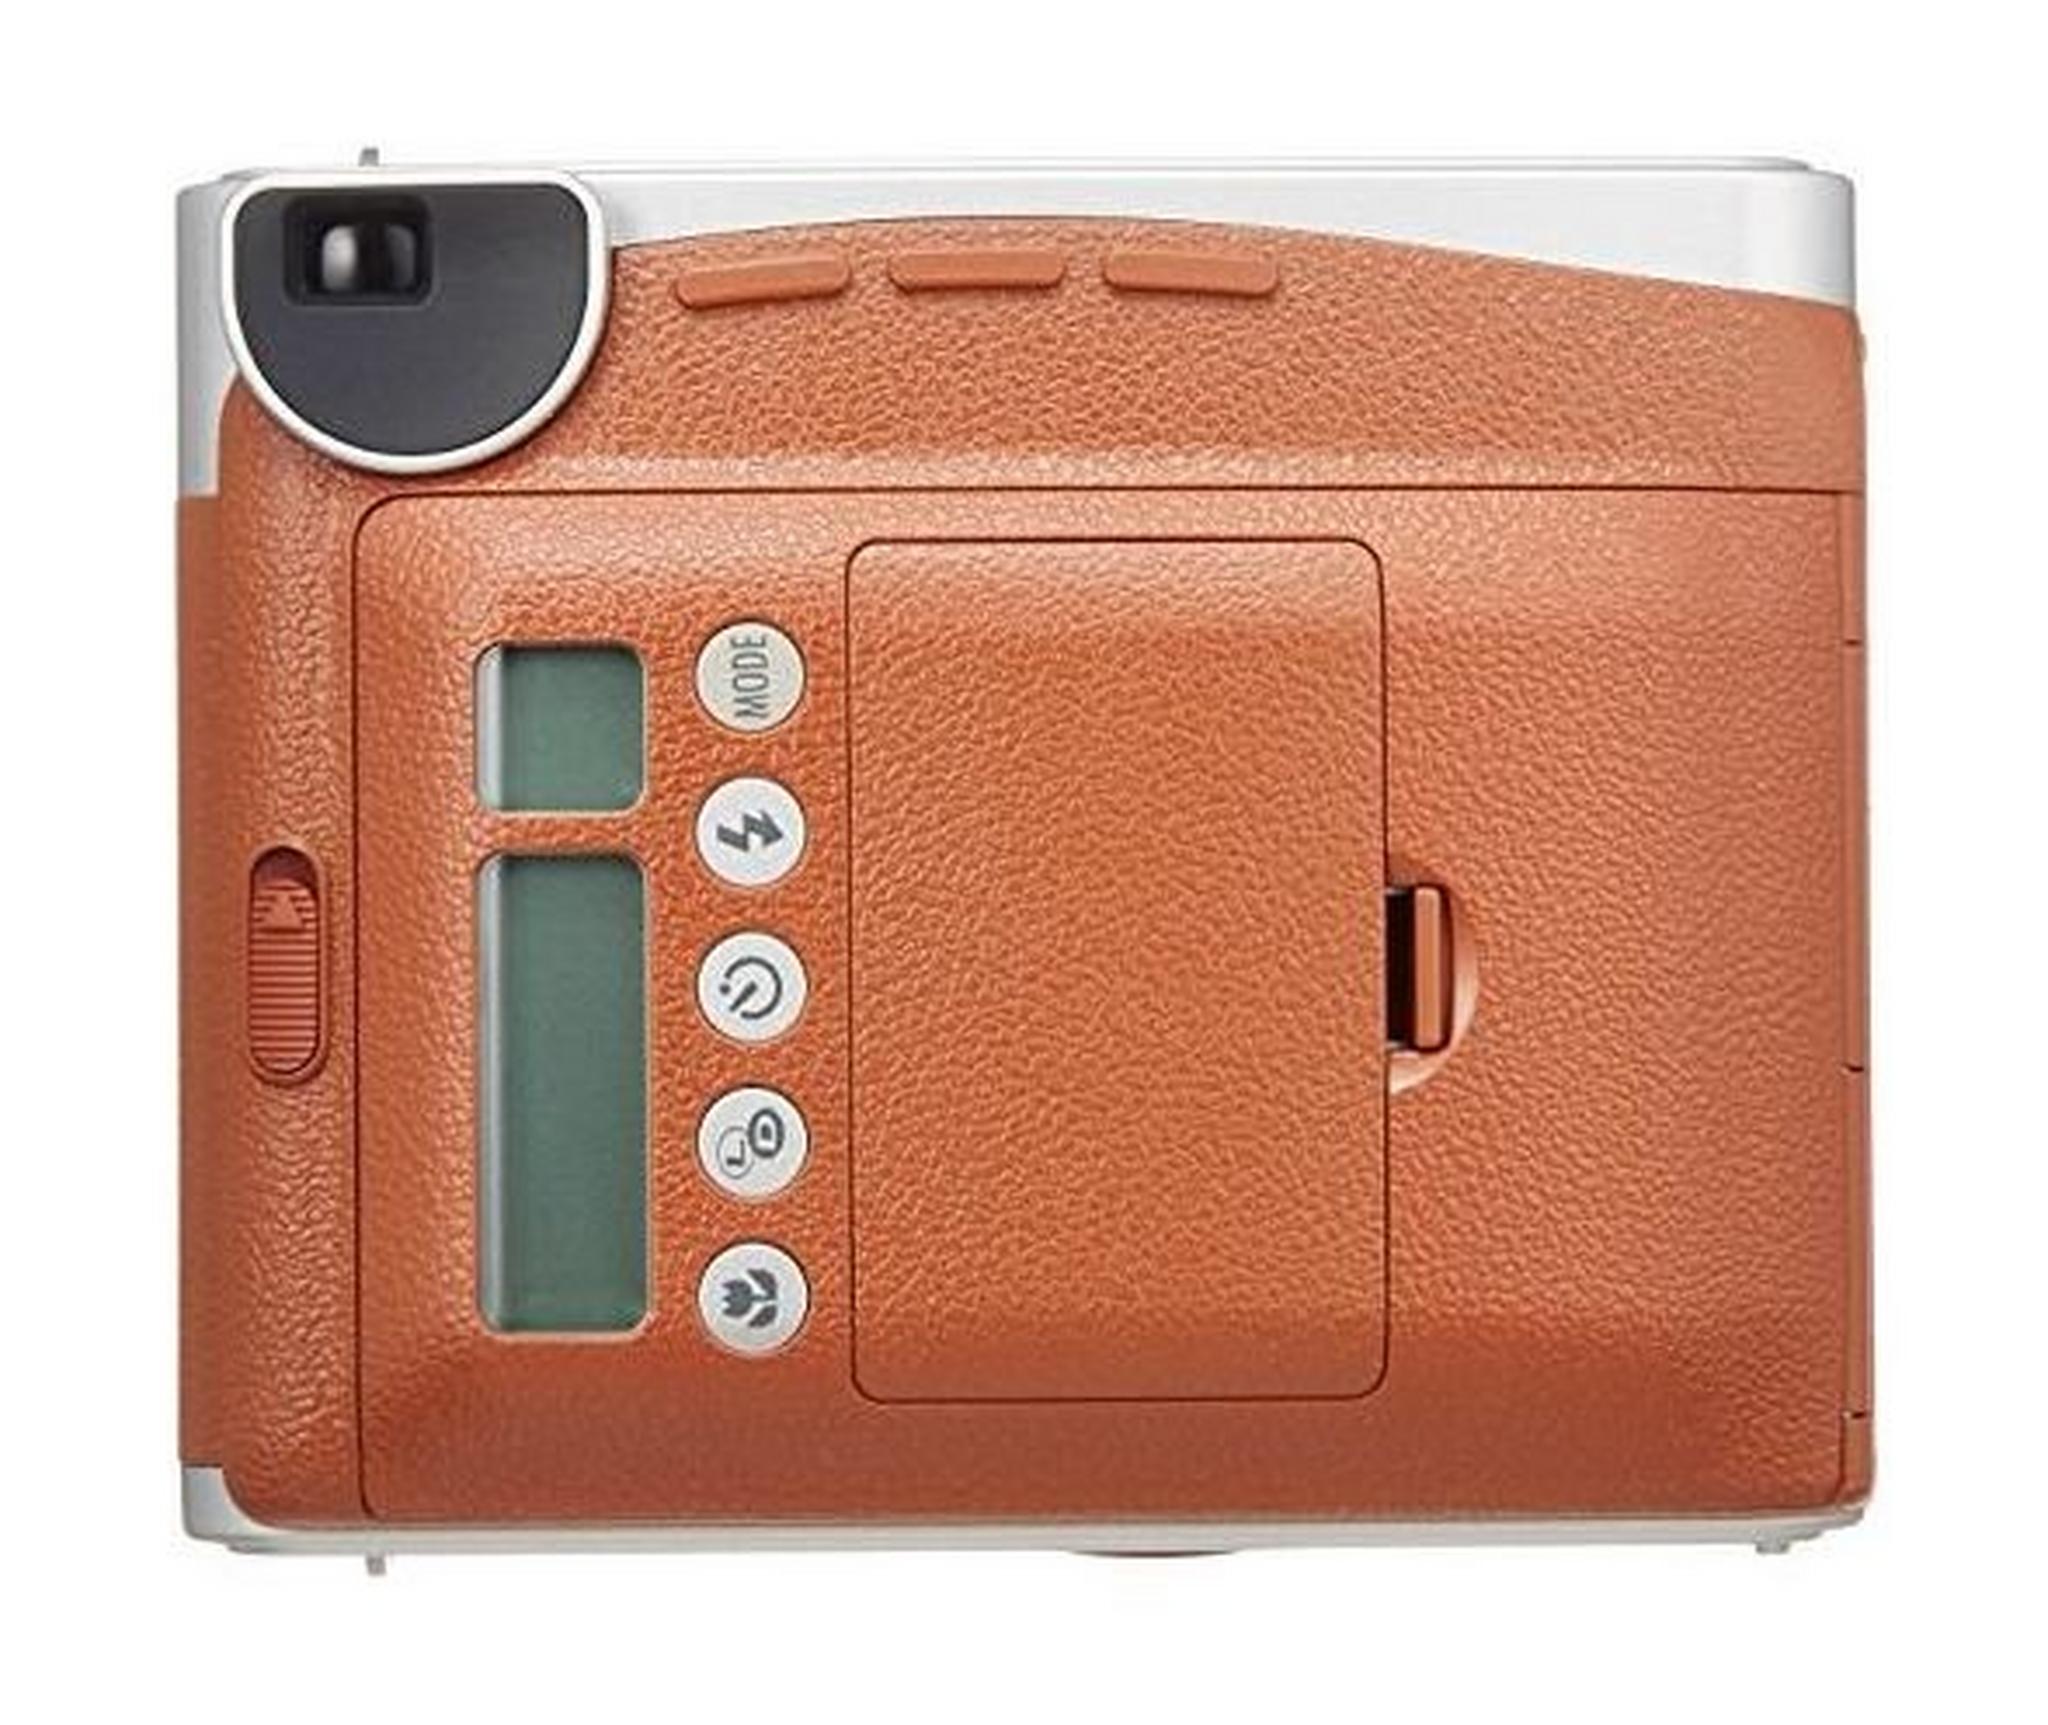 Fujifilm Instax Mini 90 Instant Camera - Brown